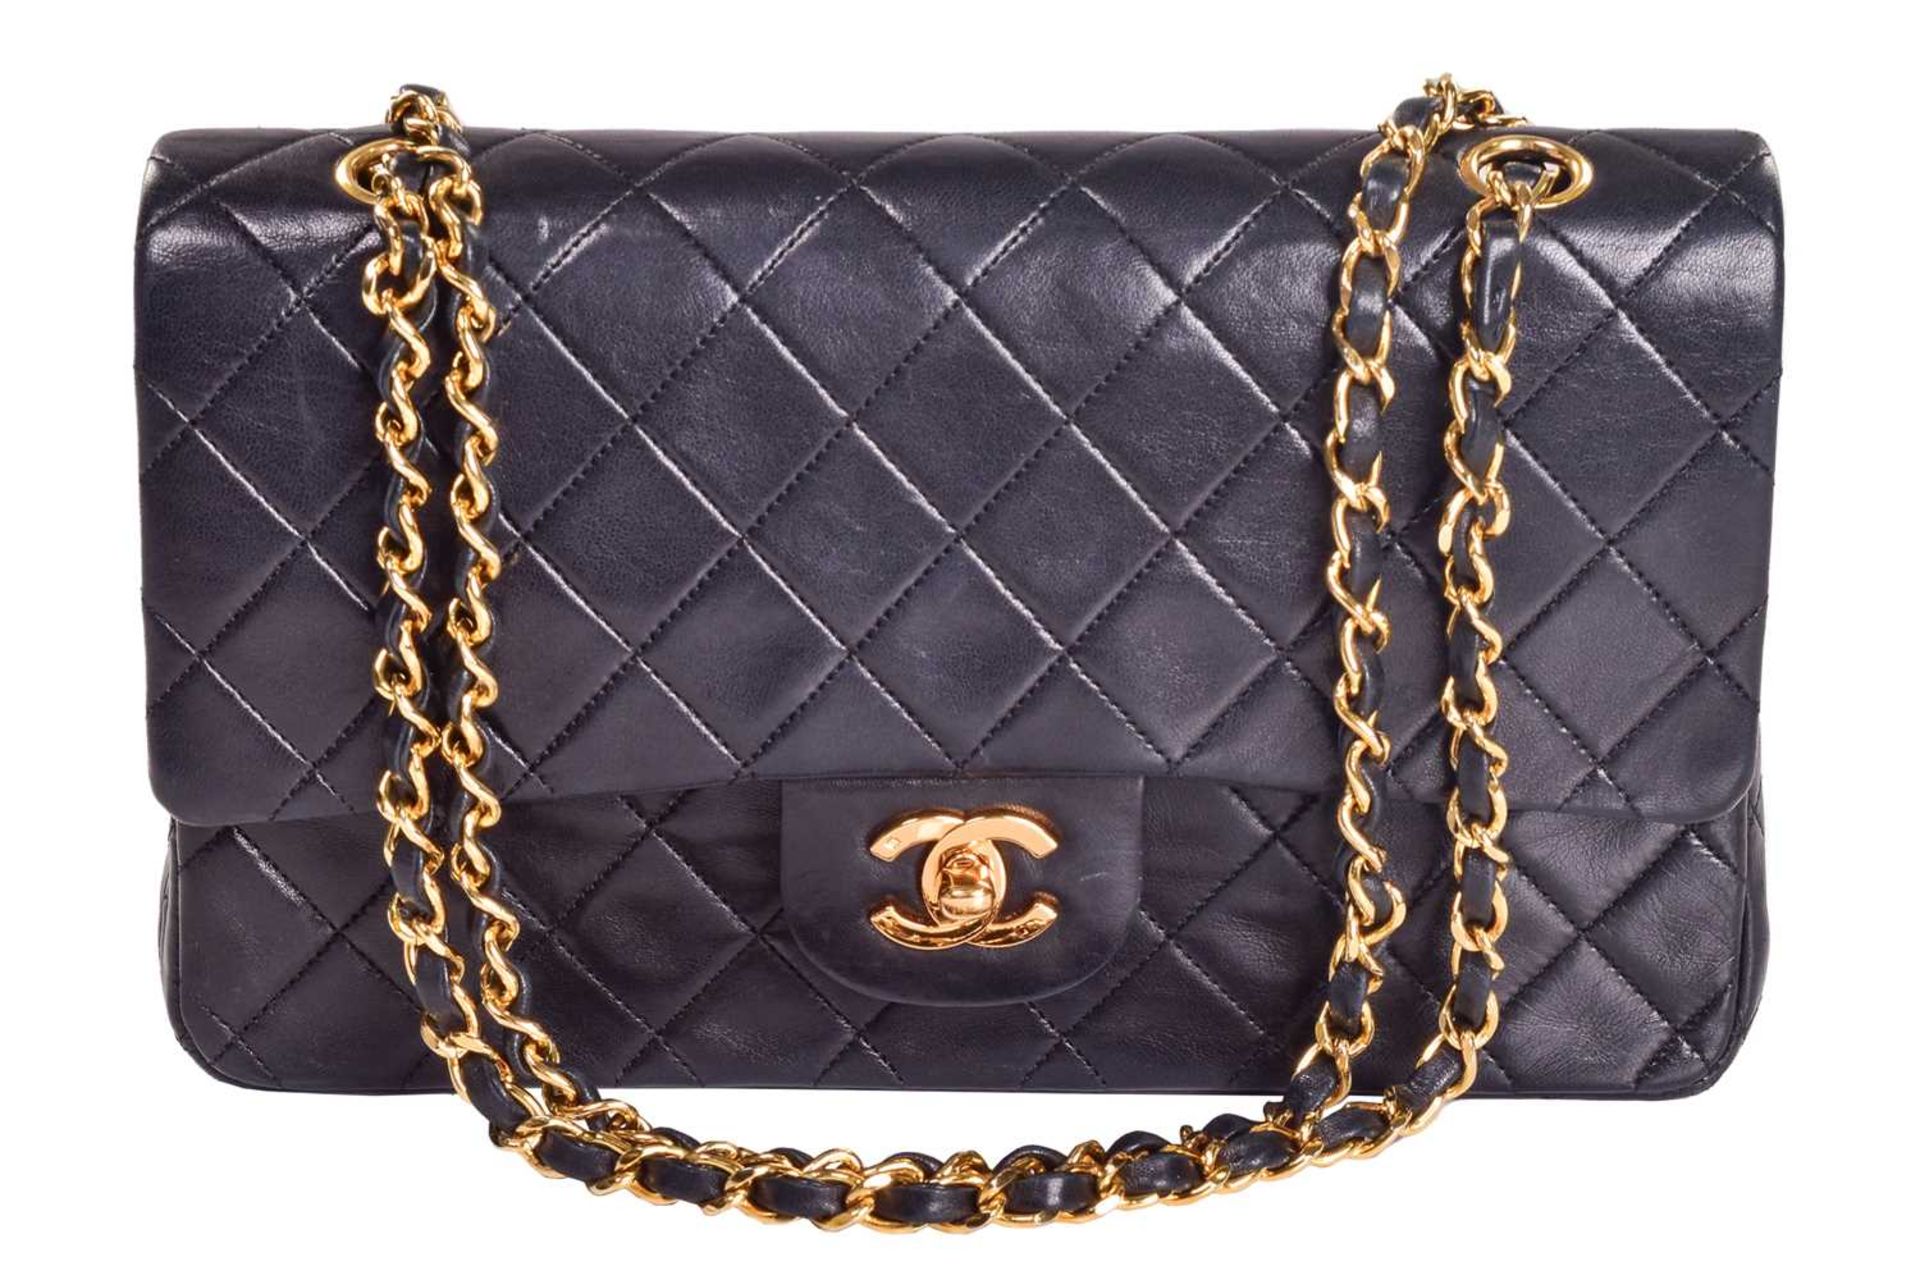 Chanel - a small double flap handbag in black lambskin, circa 1989, diamond-quilt rectangular body - Image 3 of 11